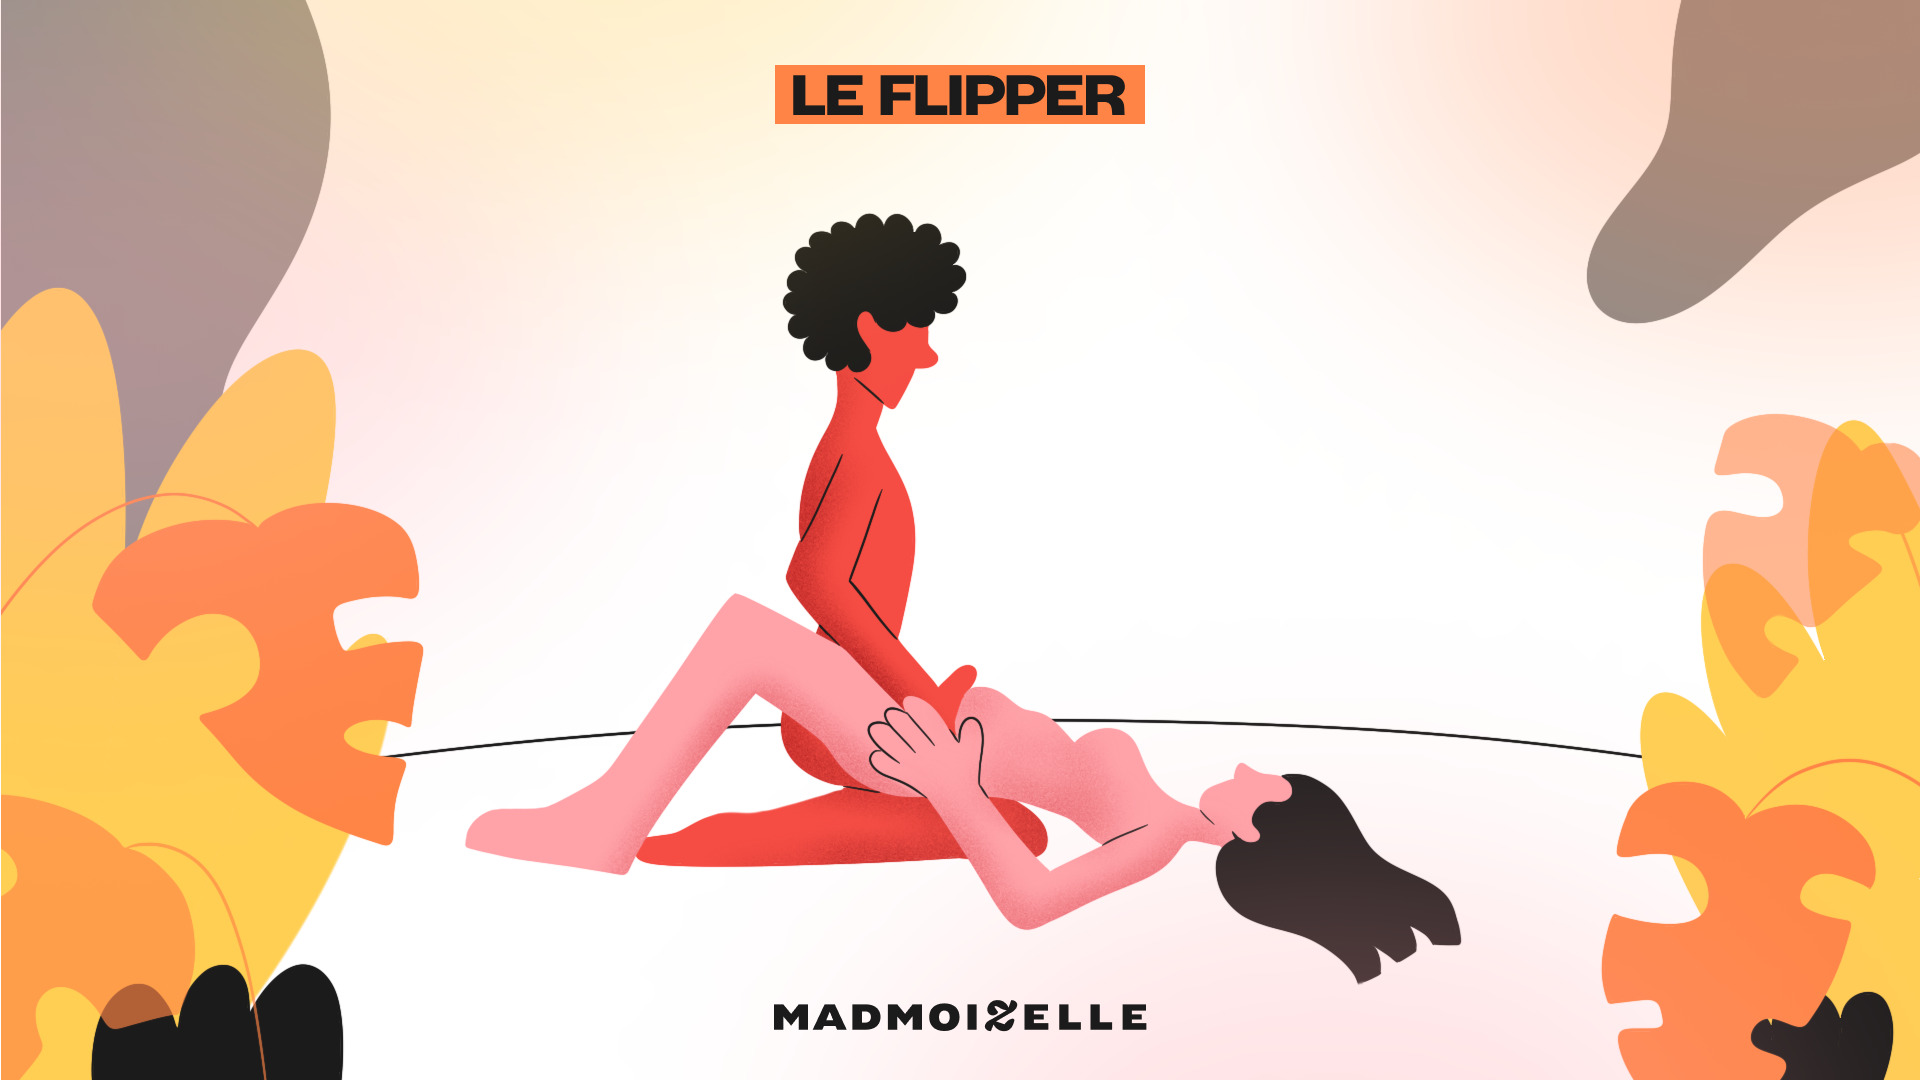 La position du flipper // Illustration : Adèle Foehrenbacher / Madmoizelle